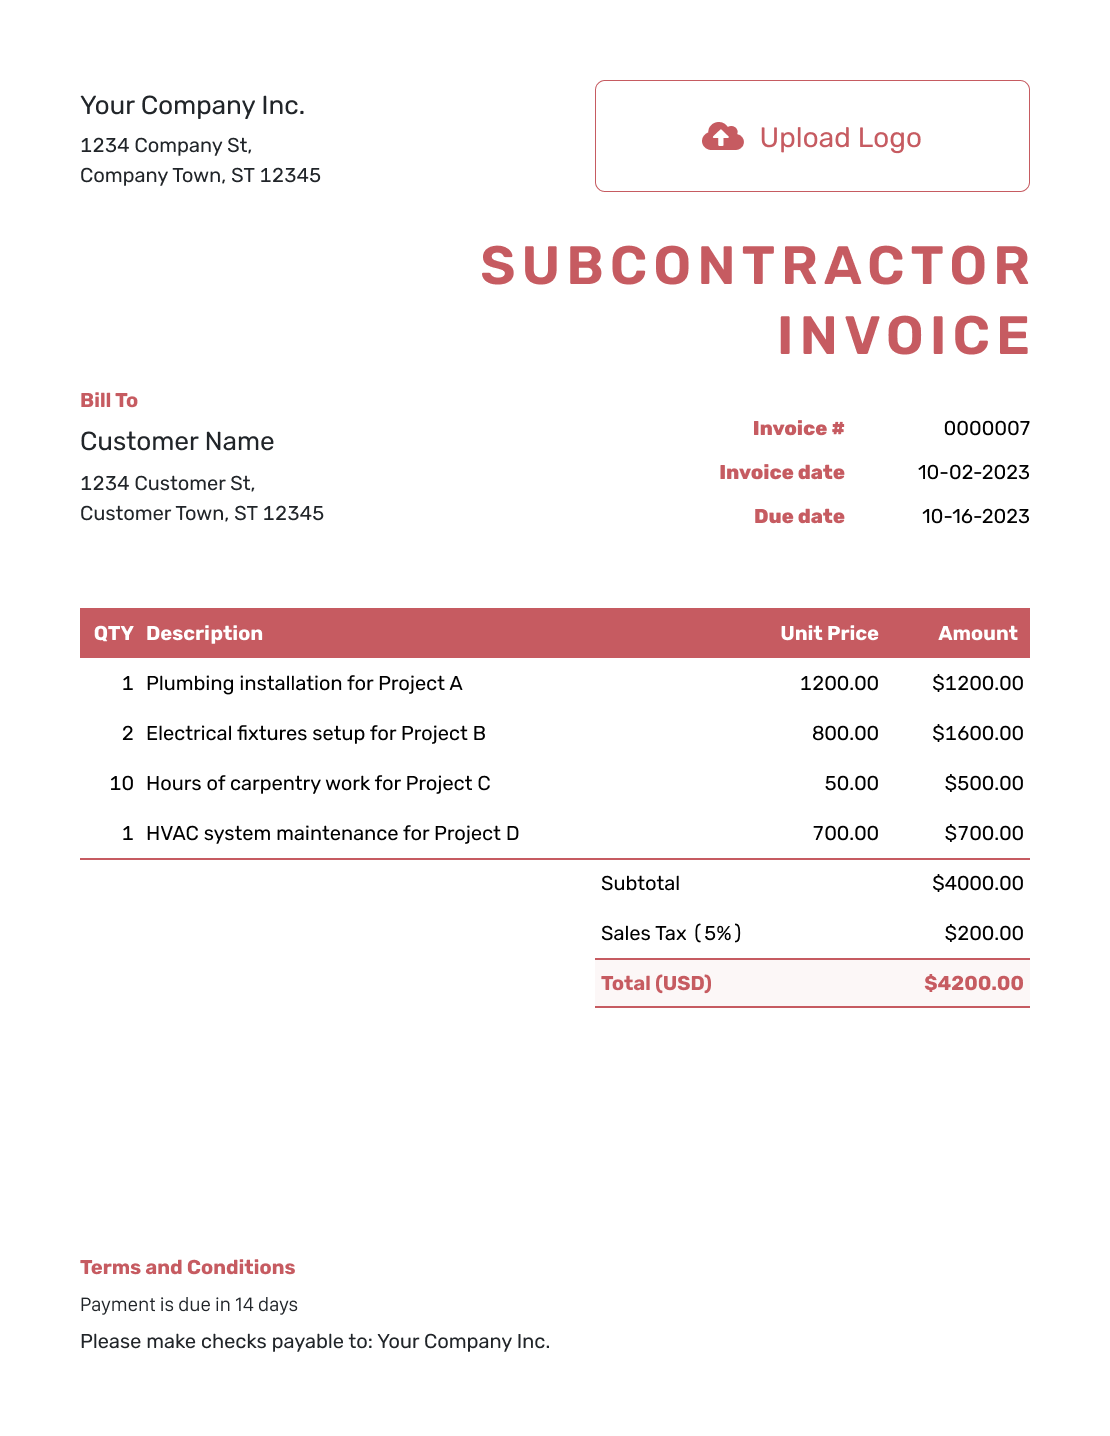 Itemized Subcontractor Invoice Template